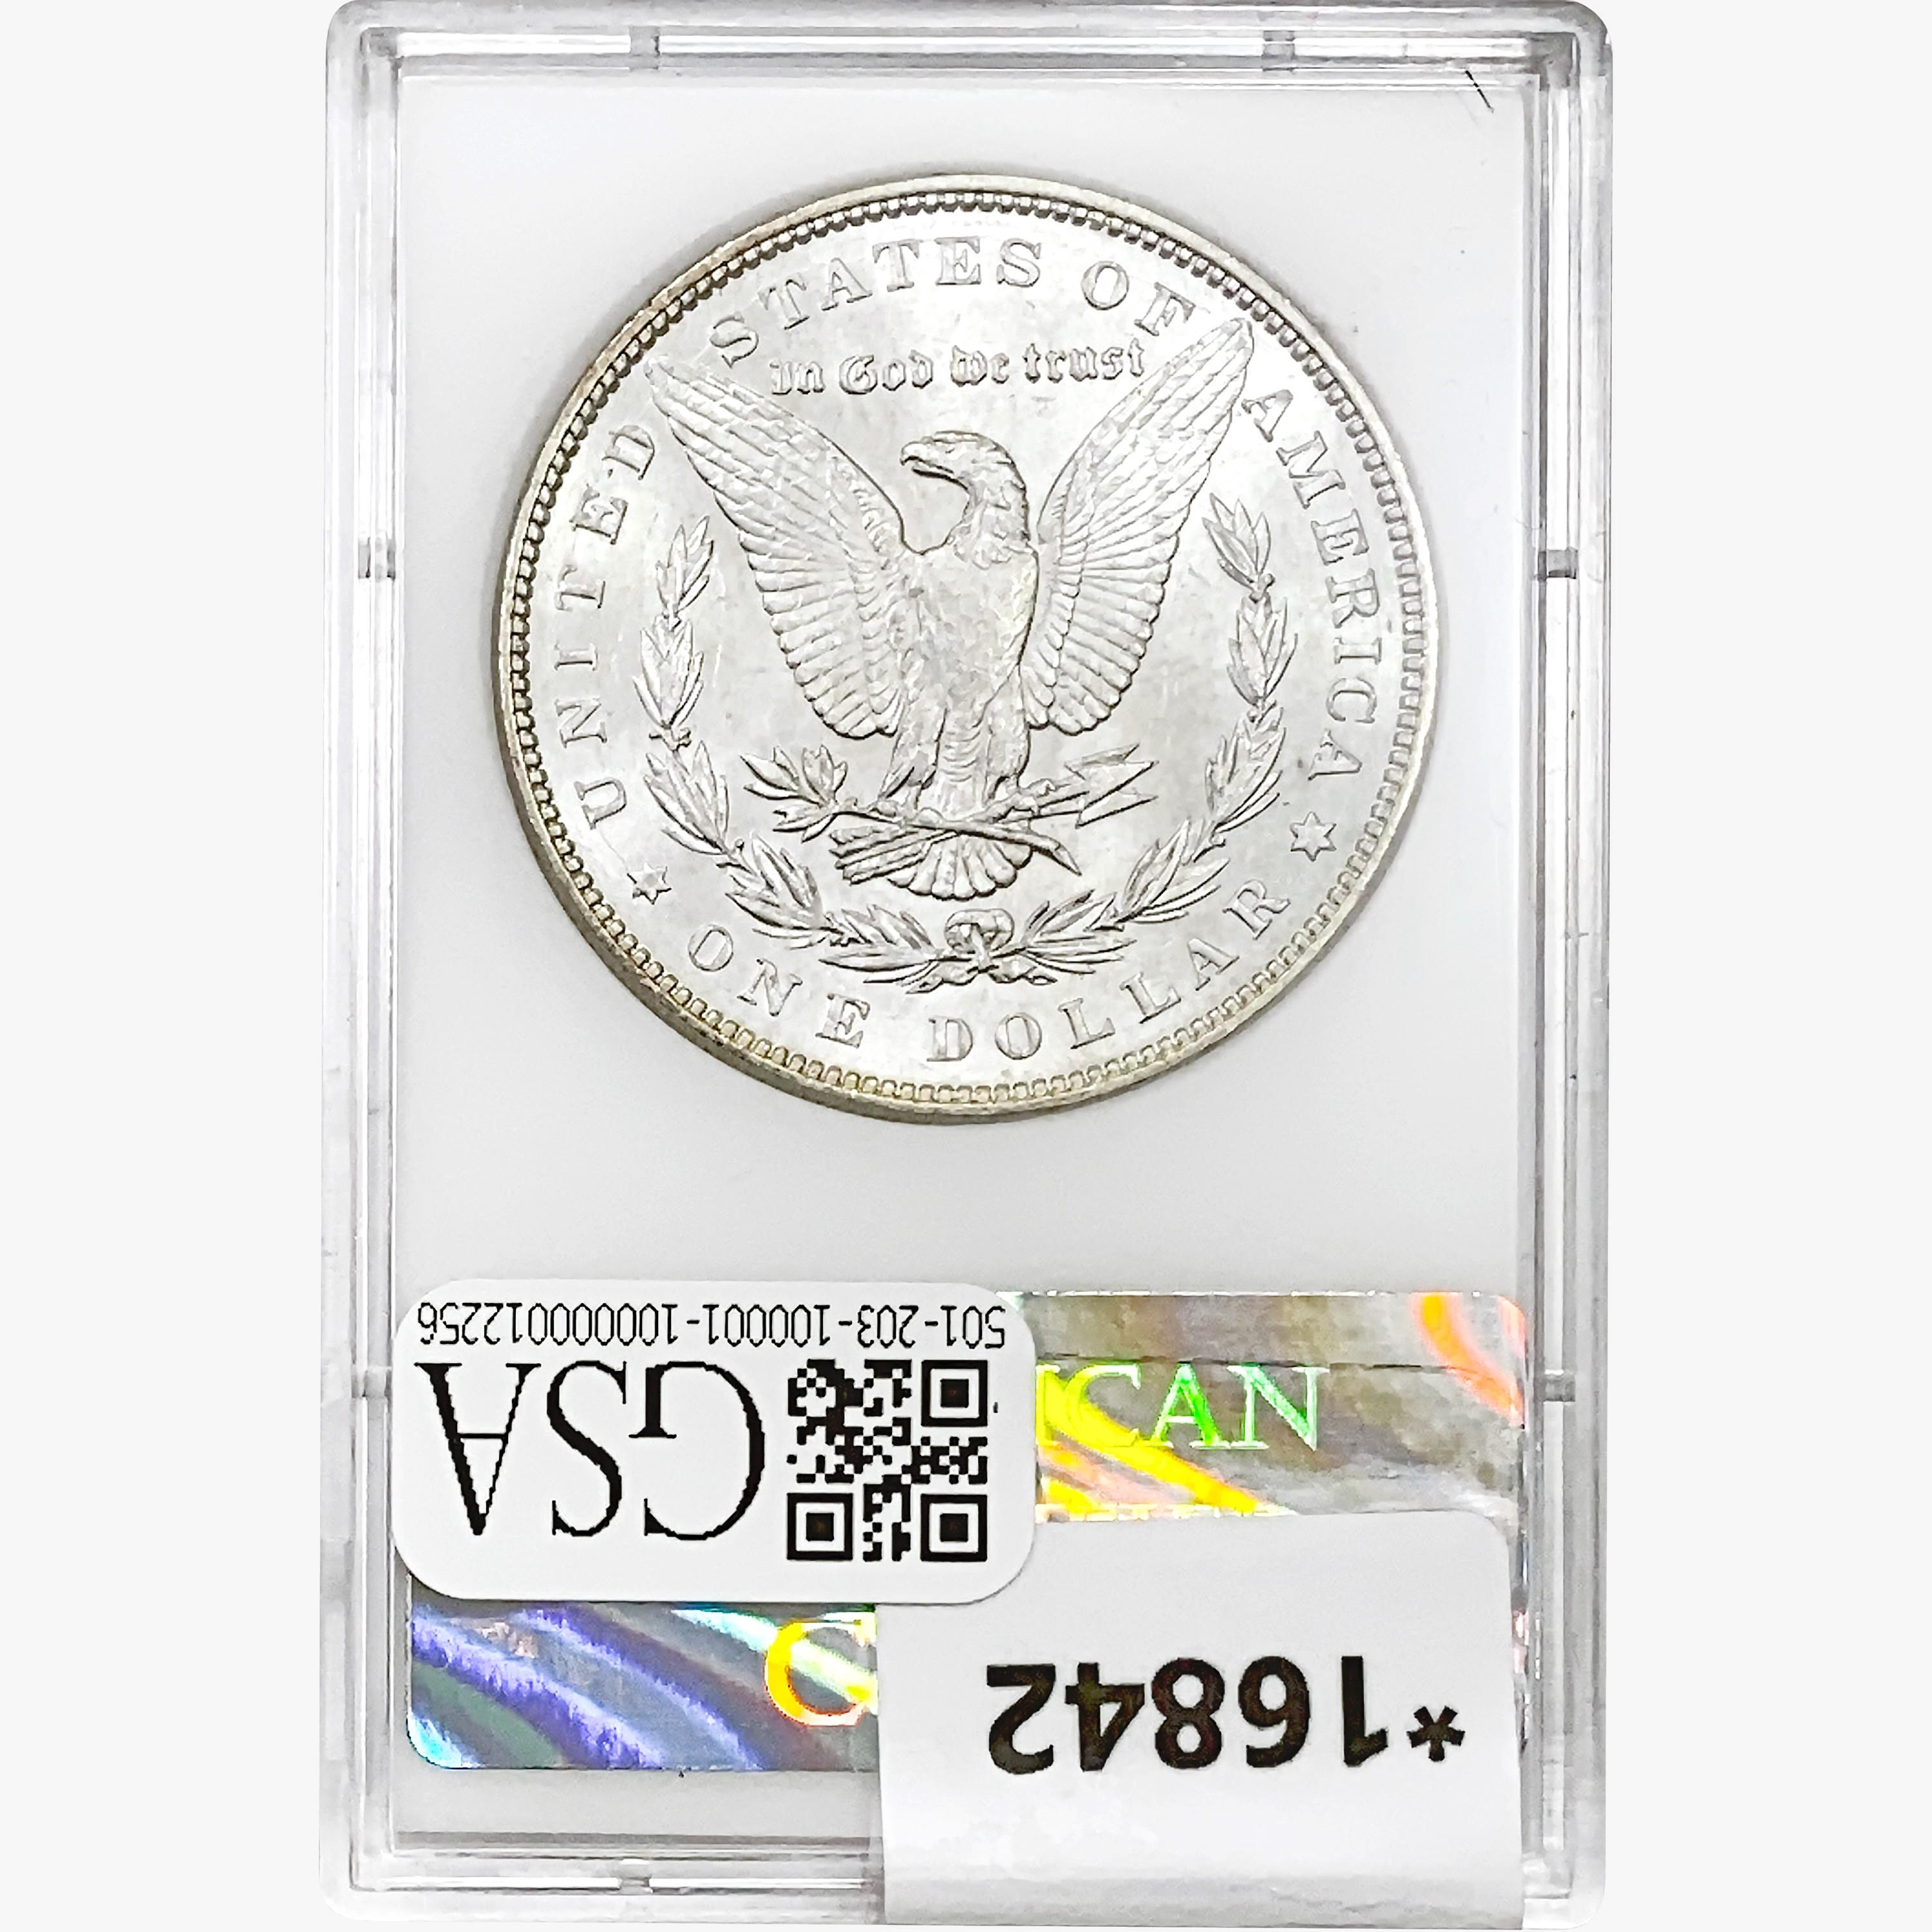 1887 Morgan Silver Dollar ACC MS63